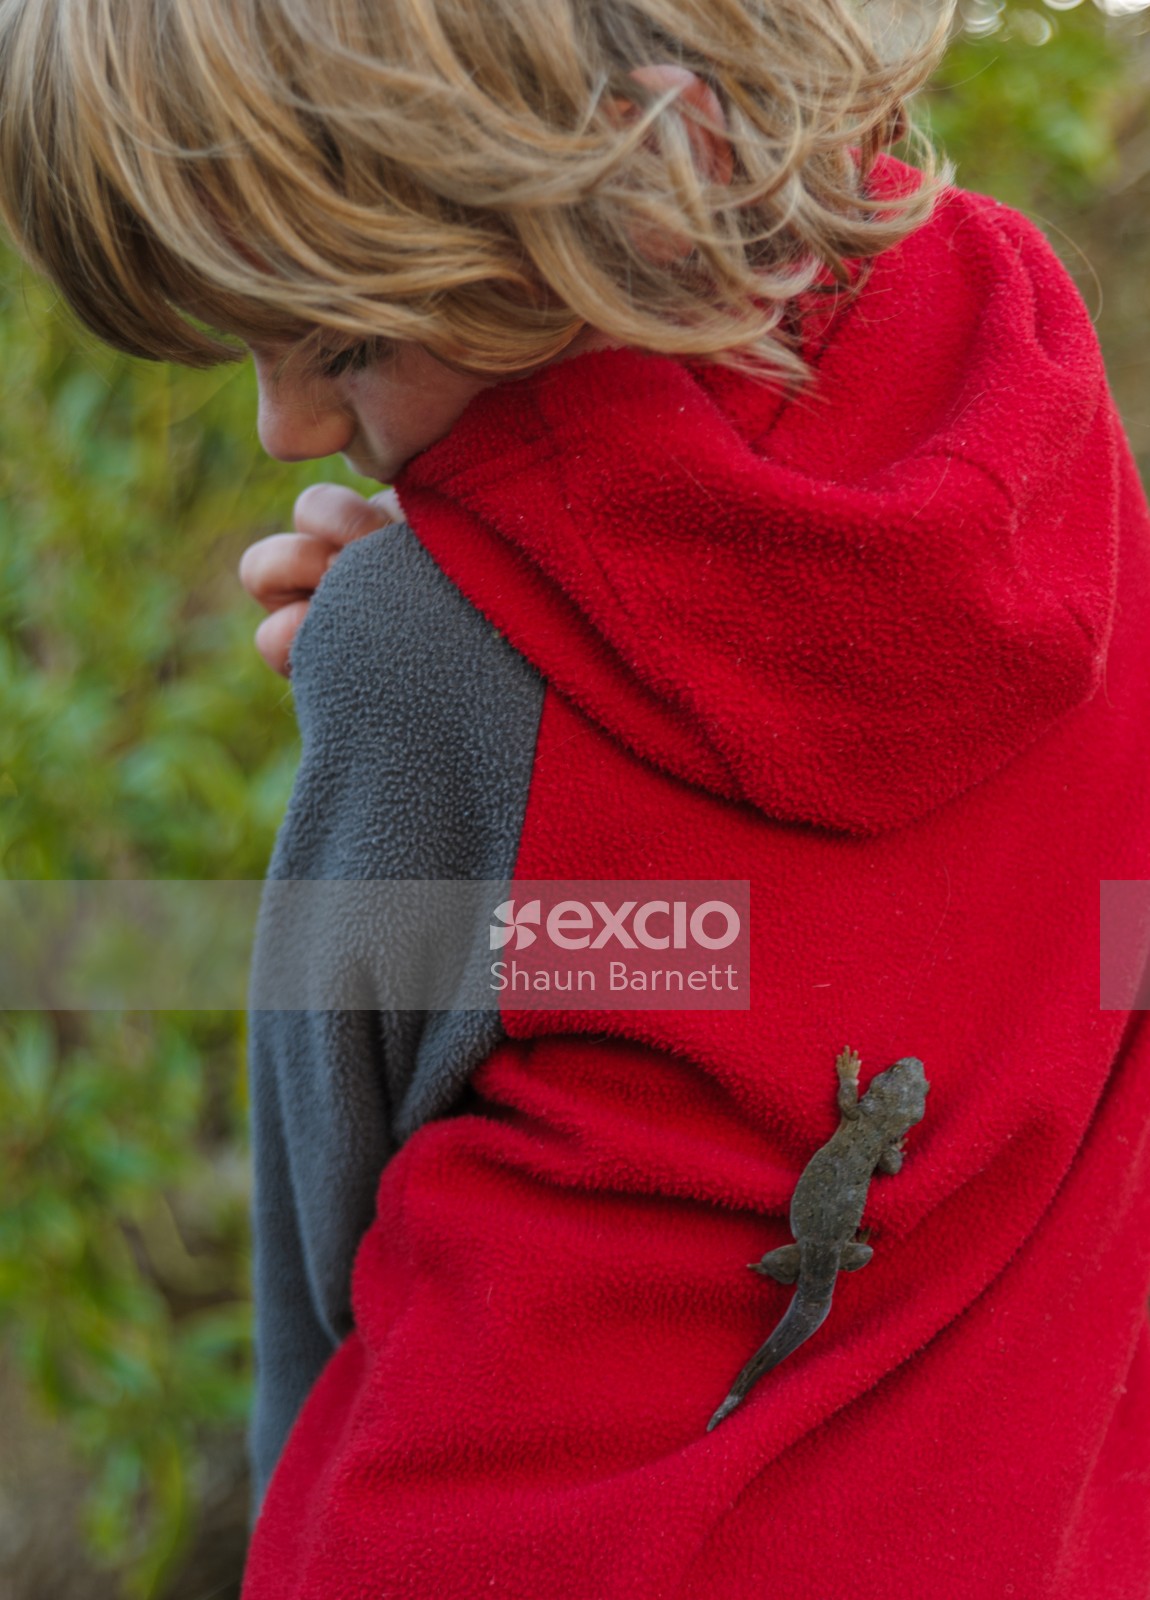 Boy with Duvaucel gecko